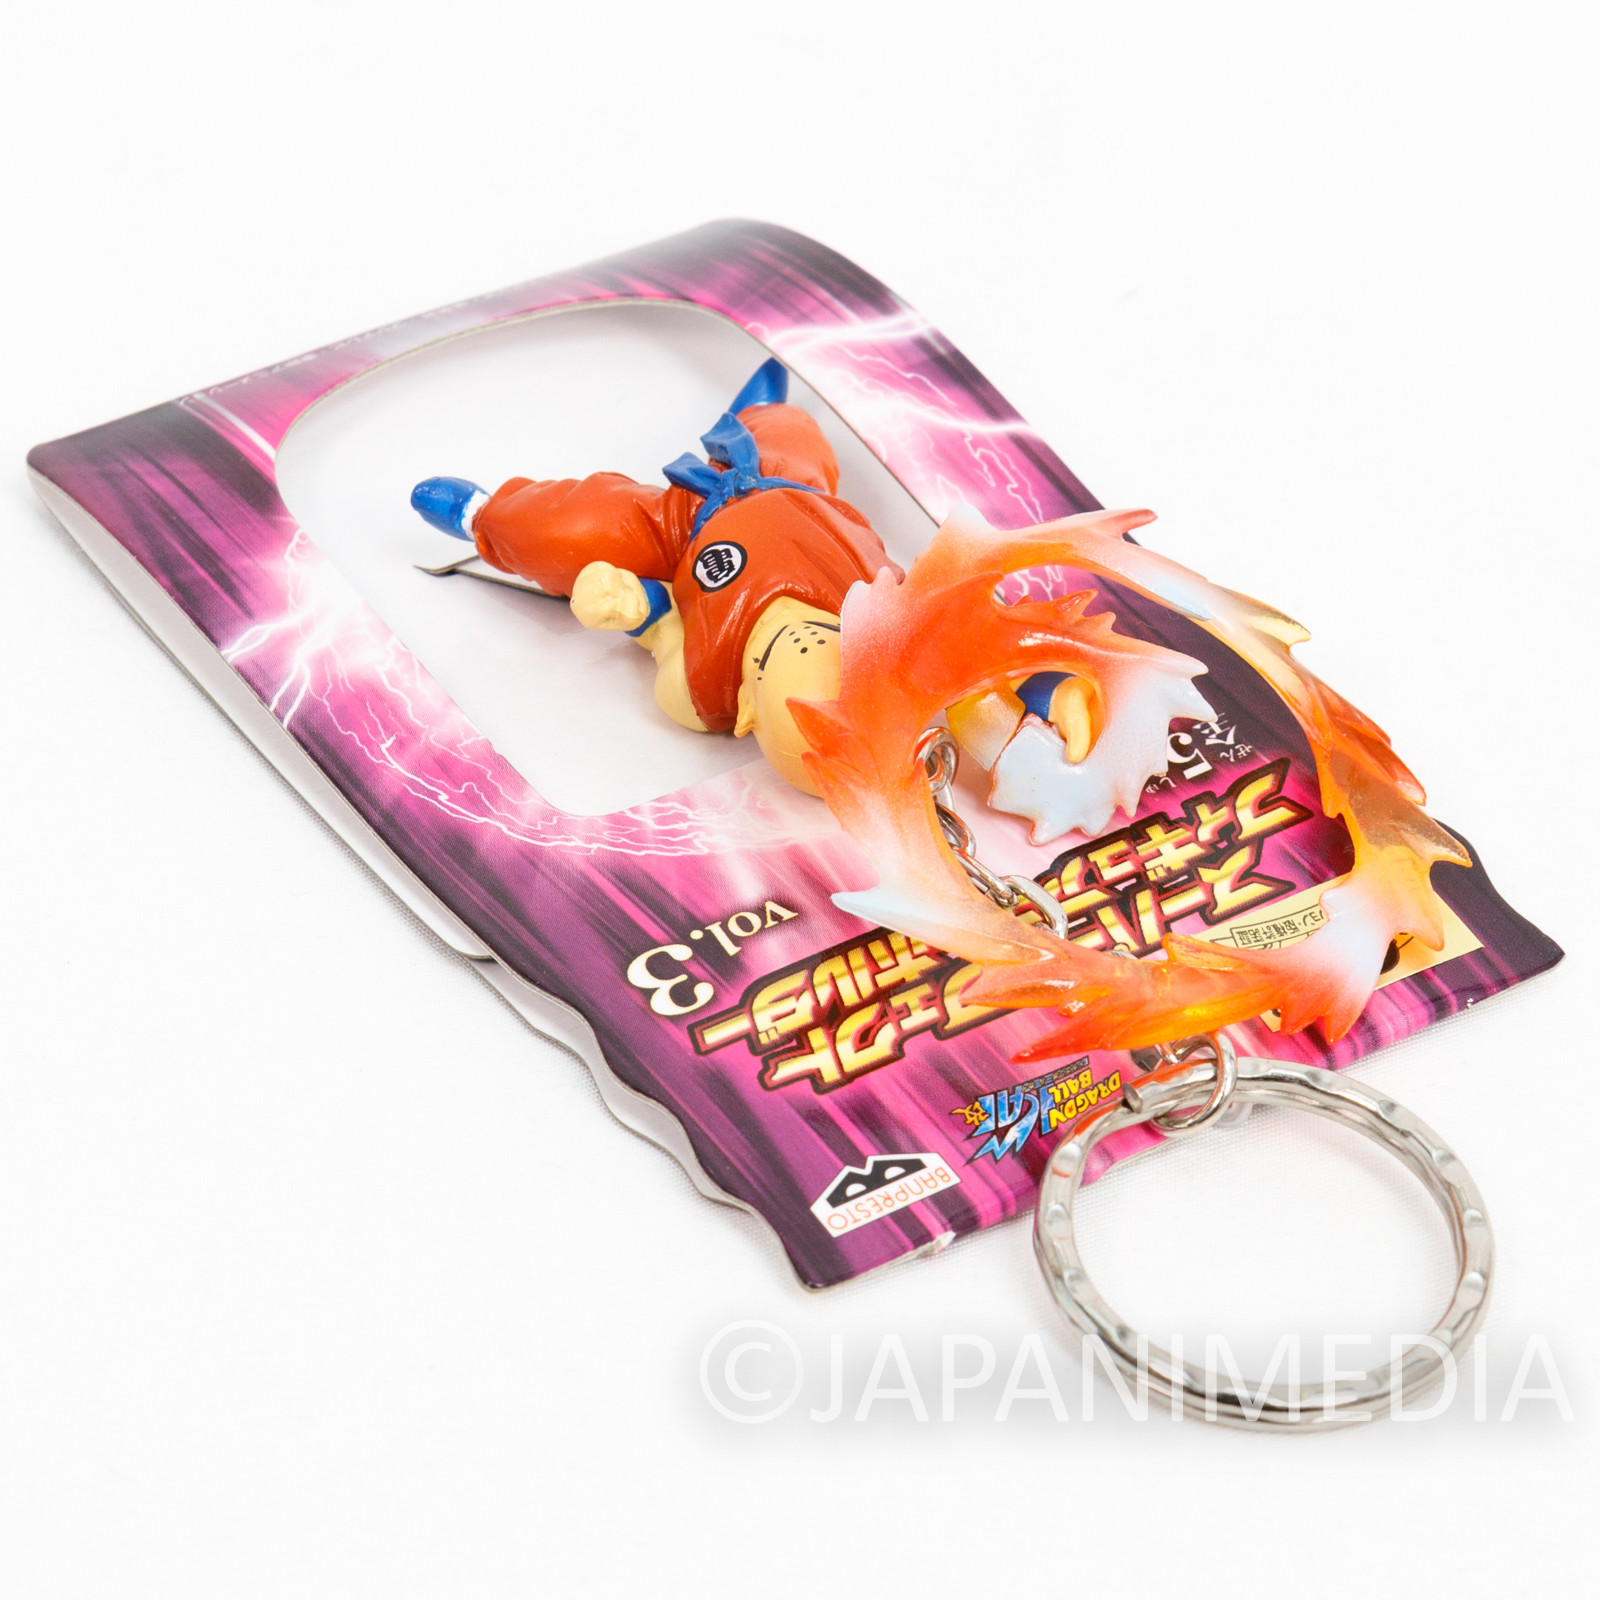 Dragon Ball Z Krillin Super Effect Mascot Figure Key Chain JAPAN ANIME MANGA